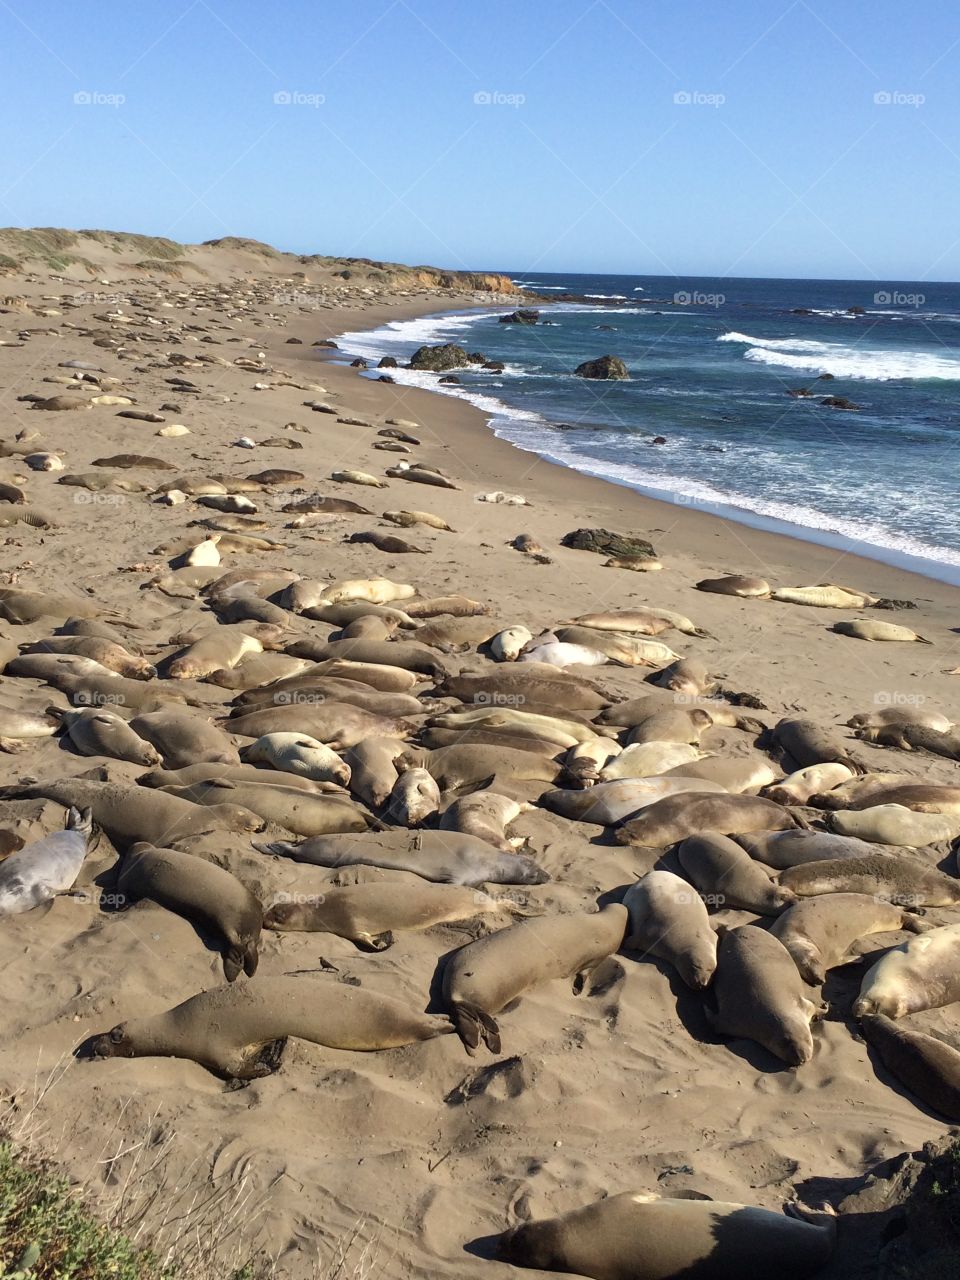 Elephant Seals claiming their beach